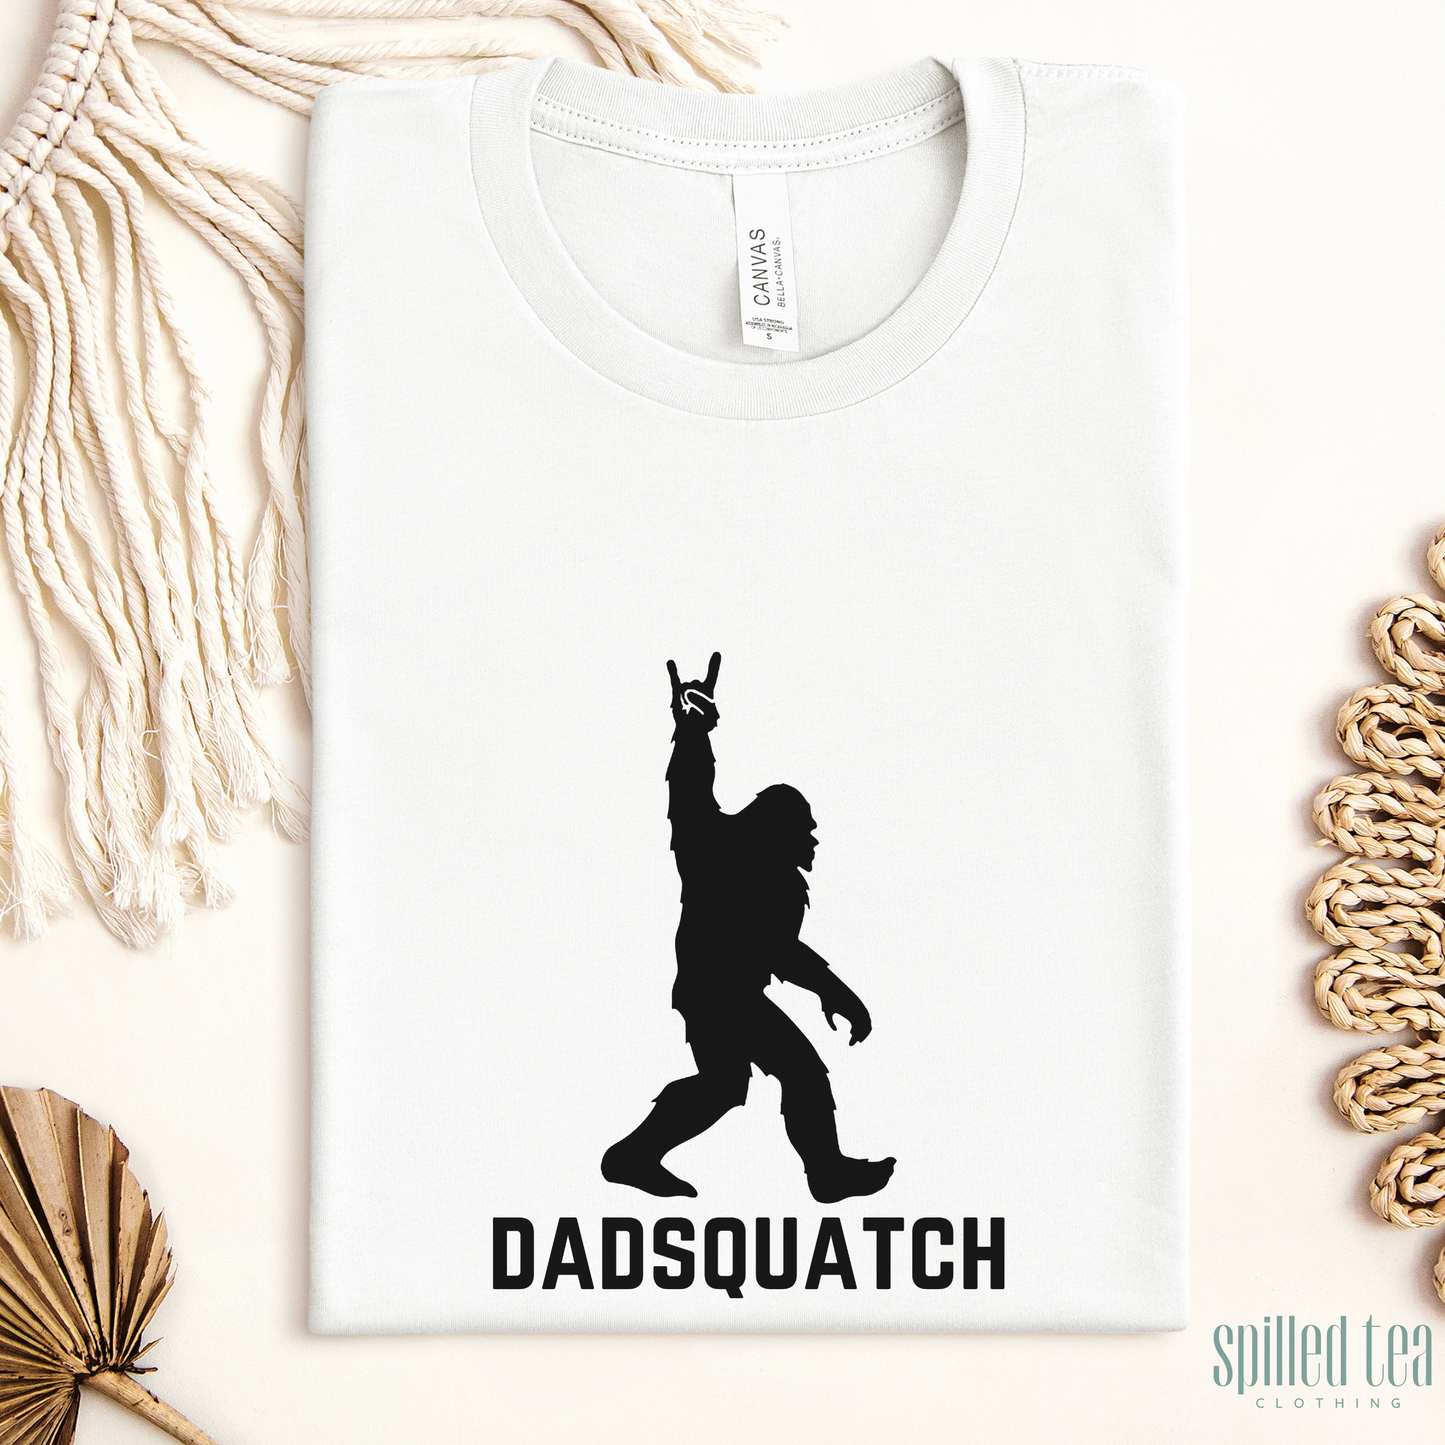 Dadsquatch T-Shirt